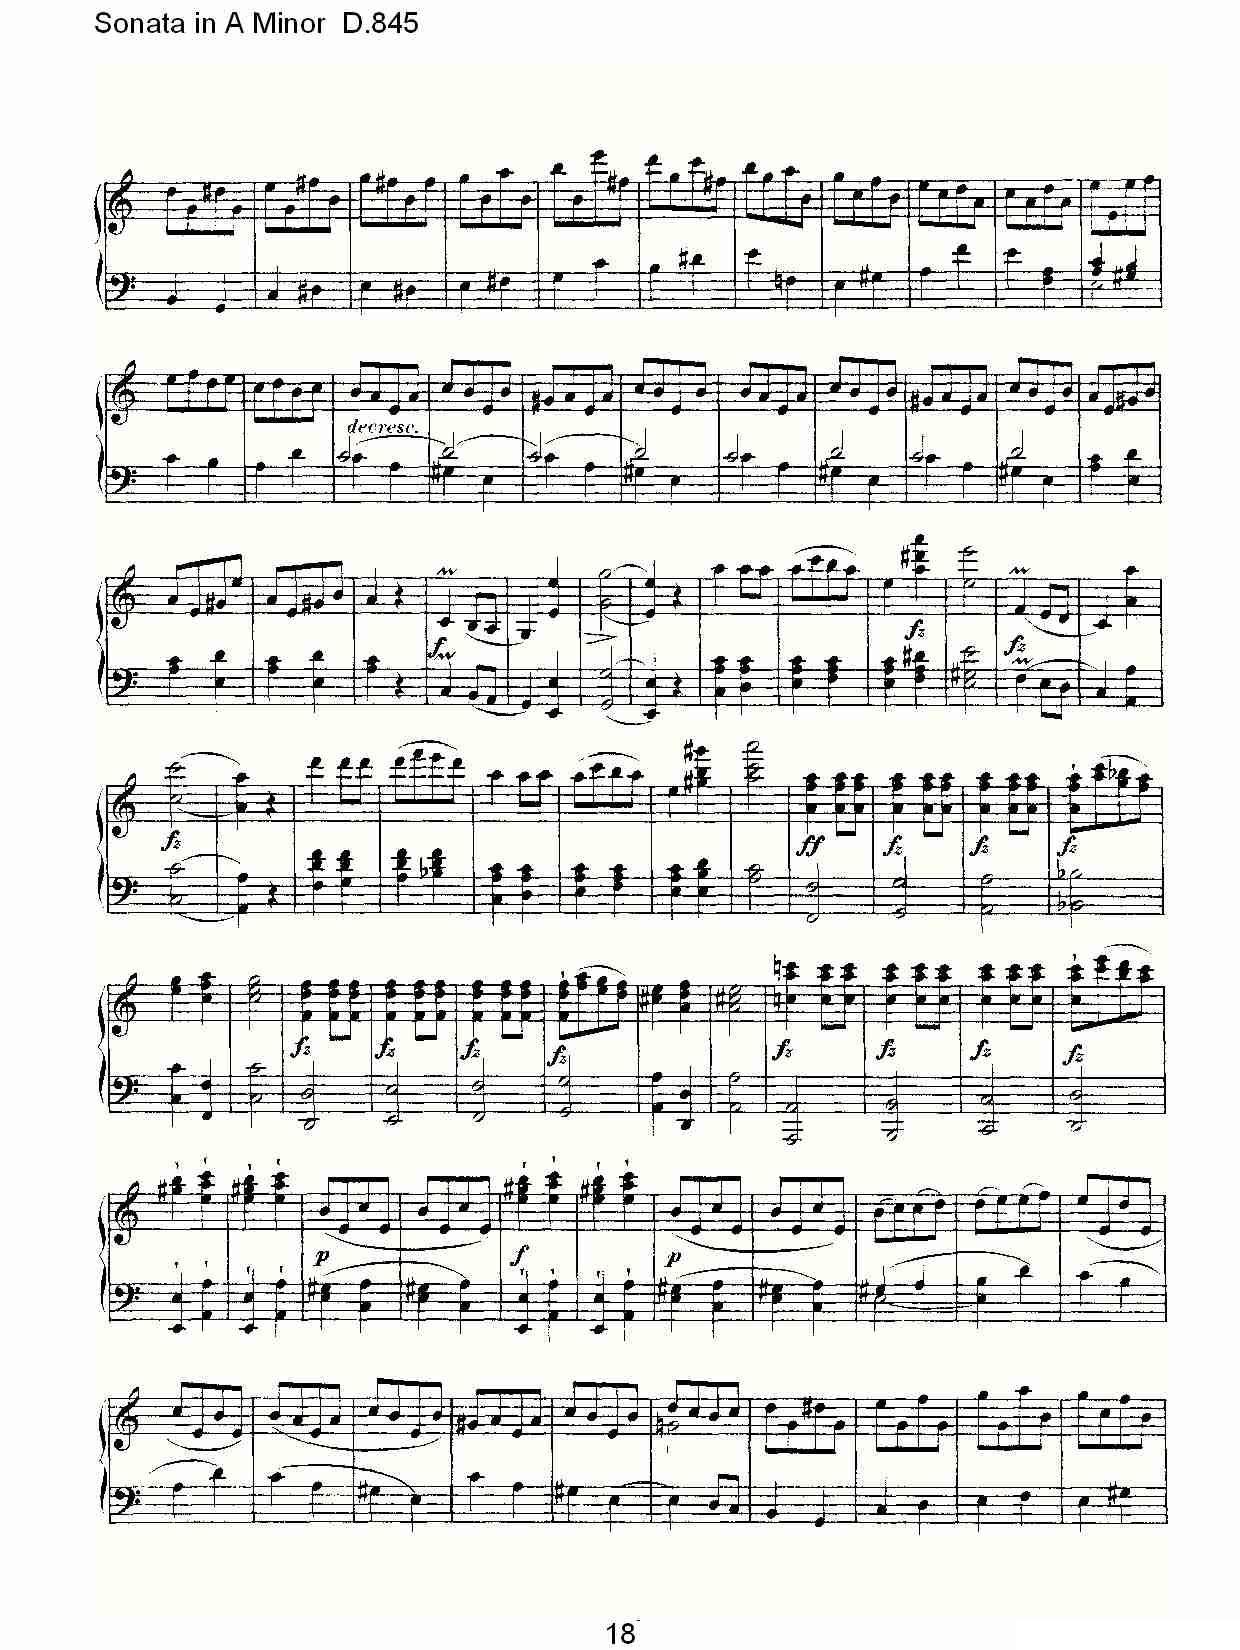 Sonata in A Minor D.845（A小调奏鸣曲 D.845）钢琴曲谱（图18）